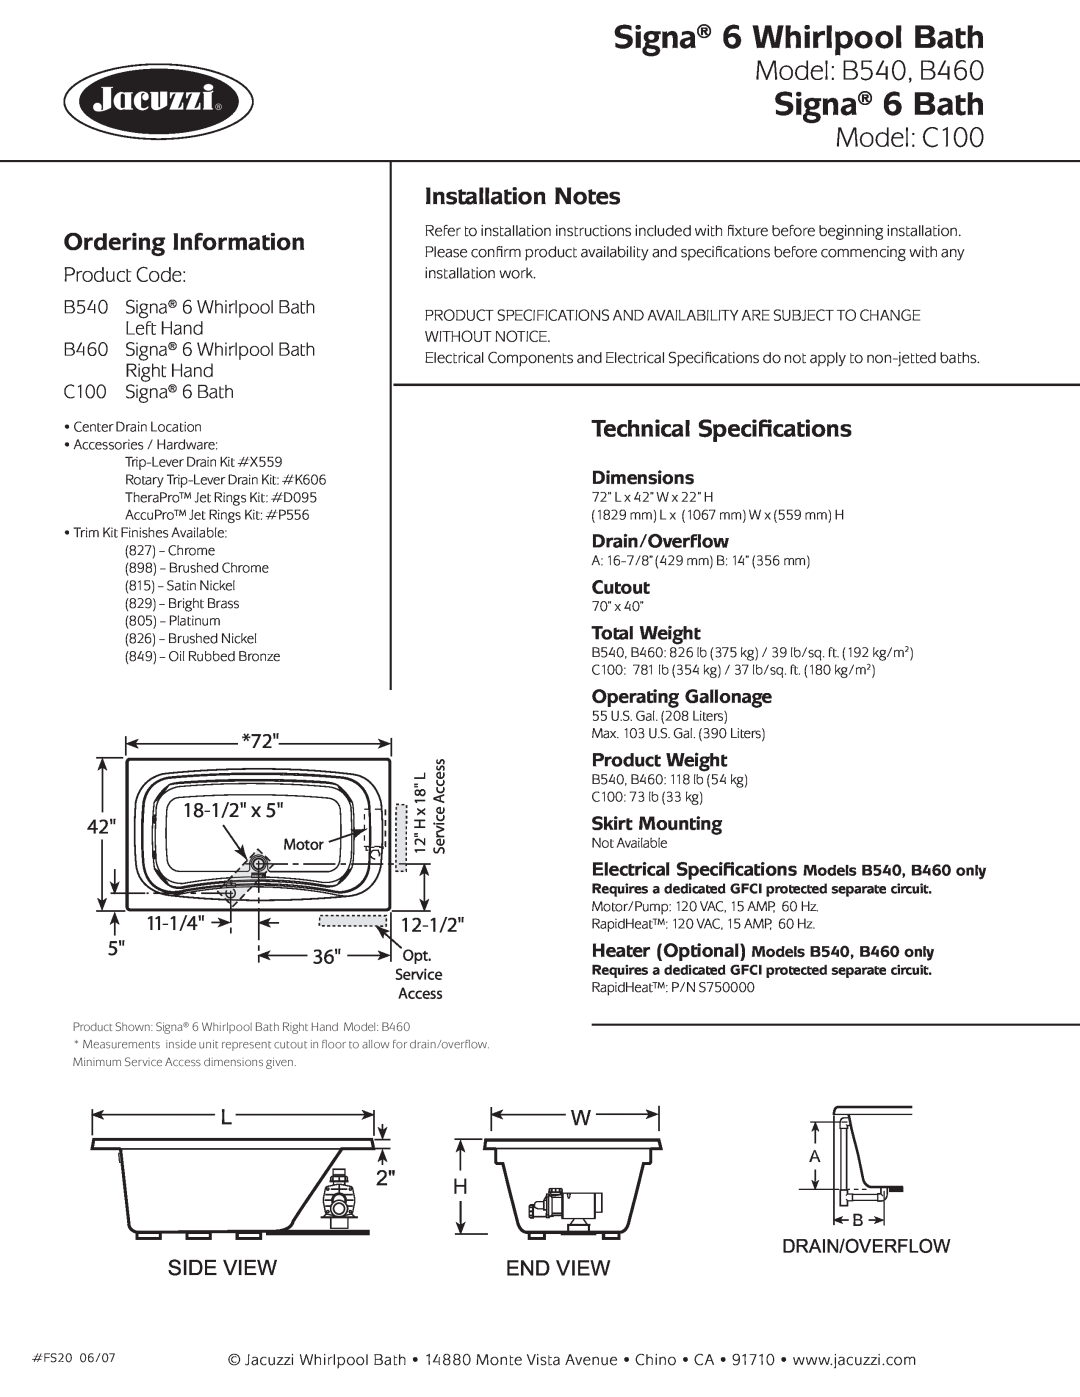 Jacuzzi Signa 6 Whirlpool Bath, Signa 6 Bath, Model B540, B460, Model C100, Ordering Information, Installation Notes 